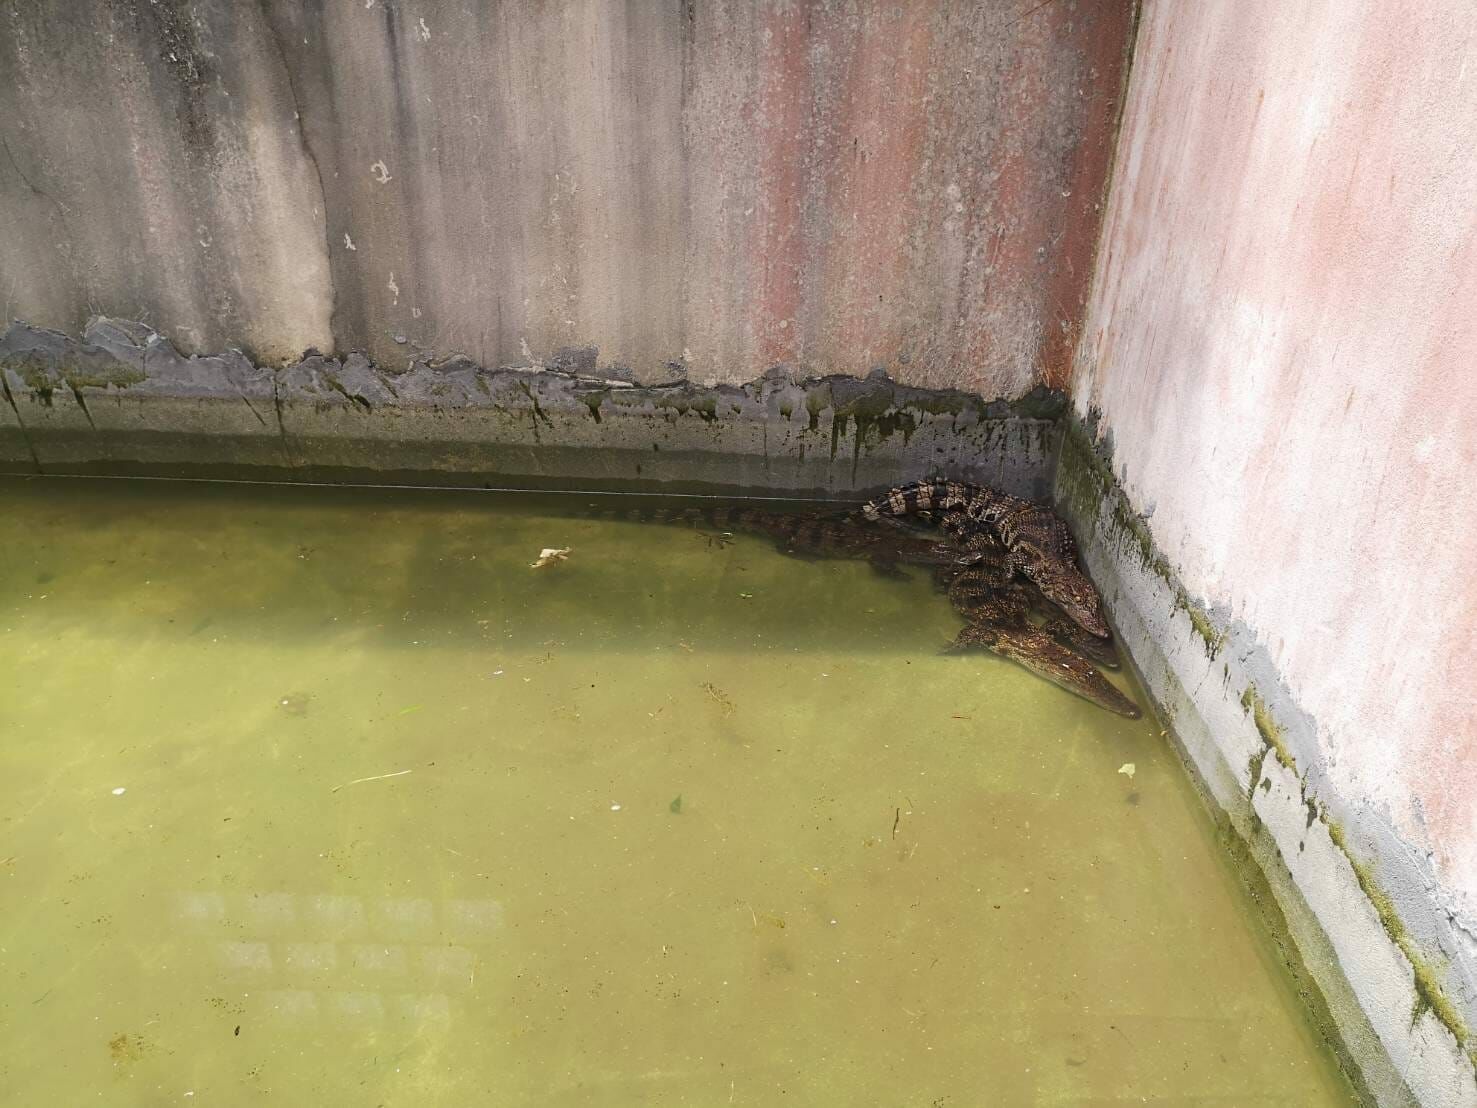 Crocodiles rock a Thailand community after 10 escape farm during flood